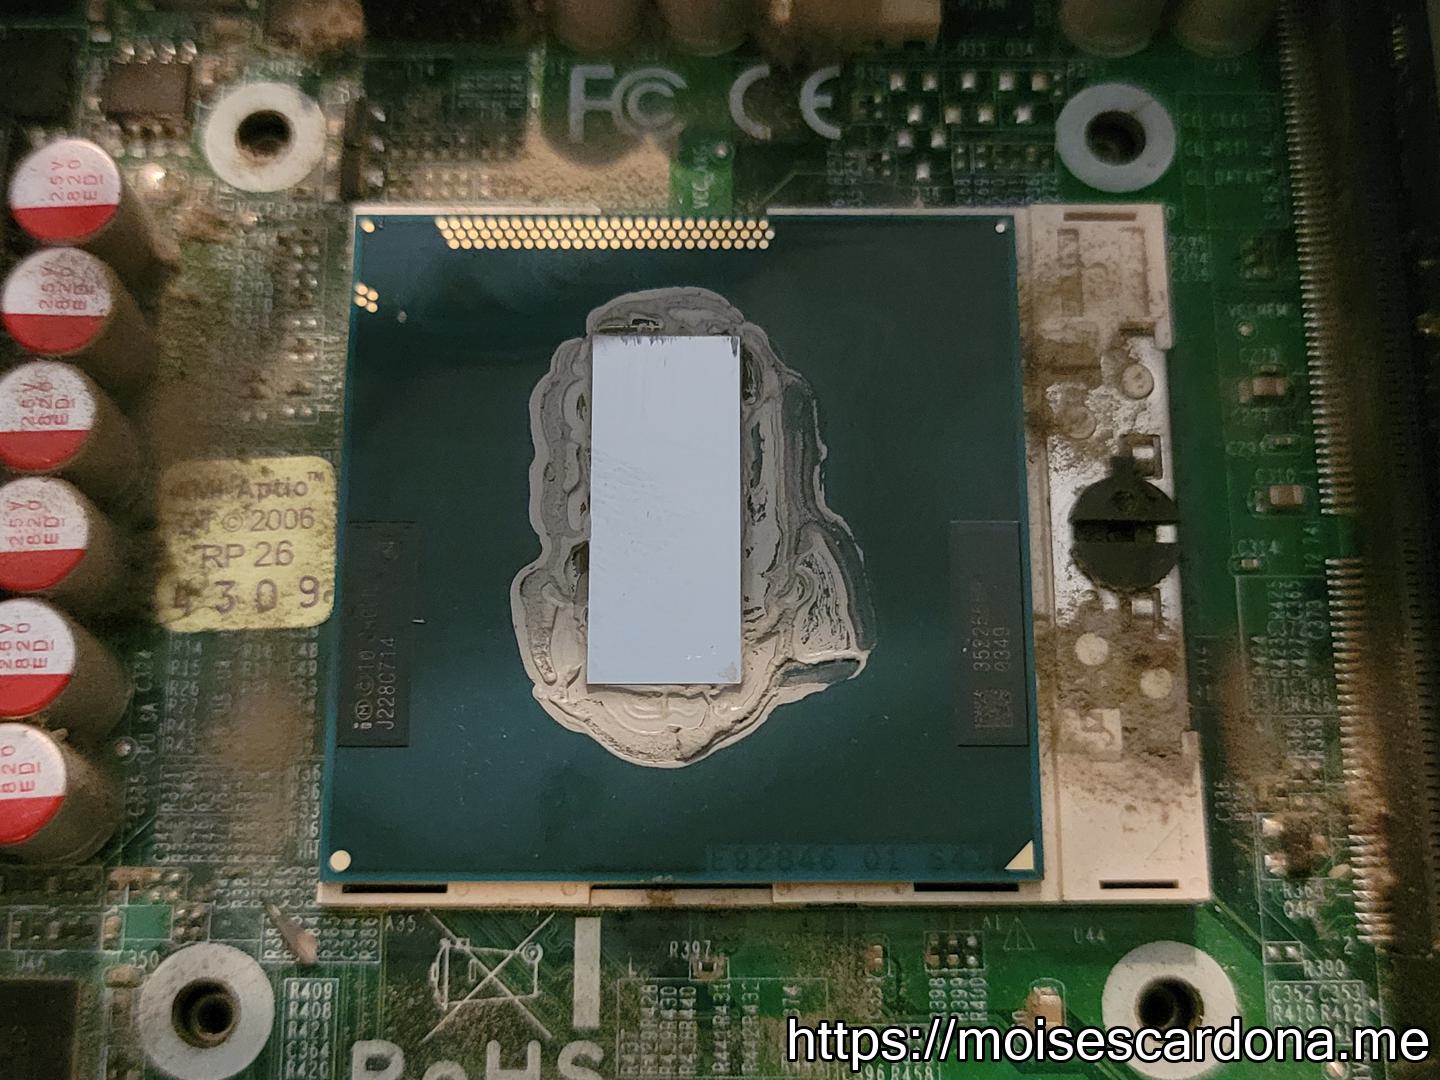 08 - Installing the Intel i7-3720QM CPU in the Socket G2